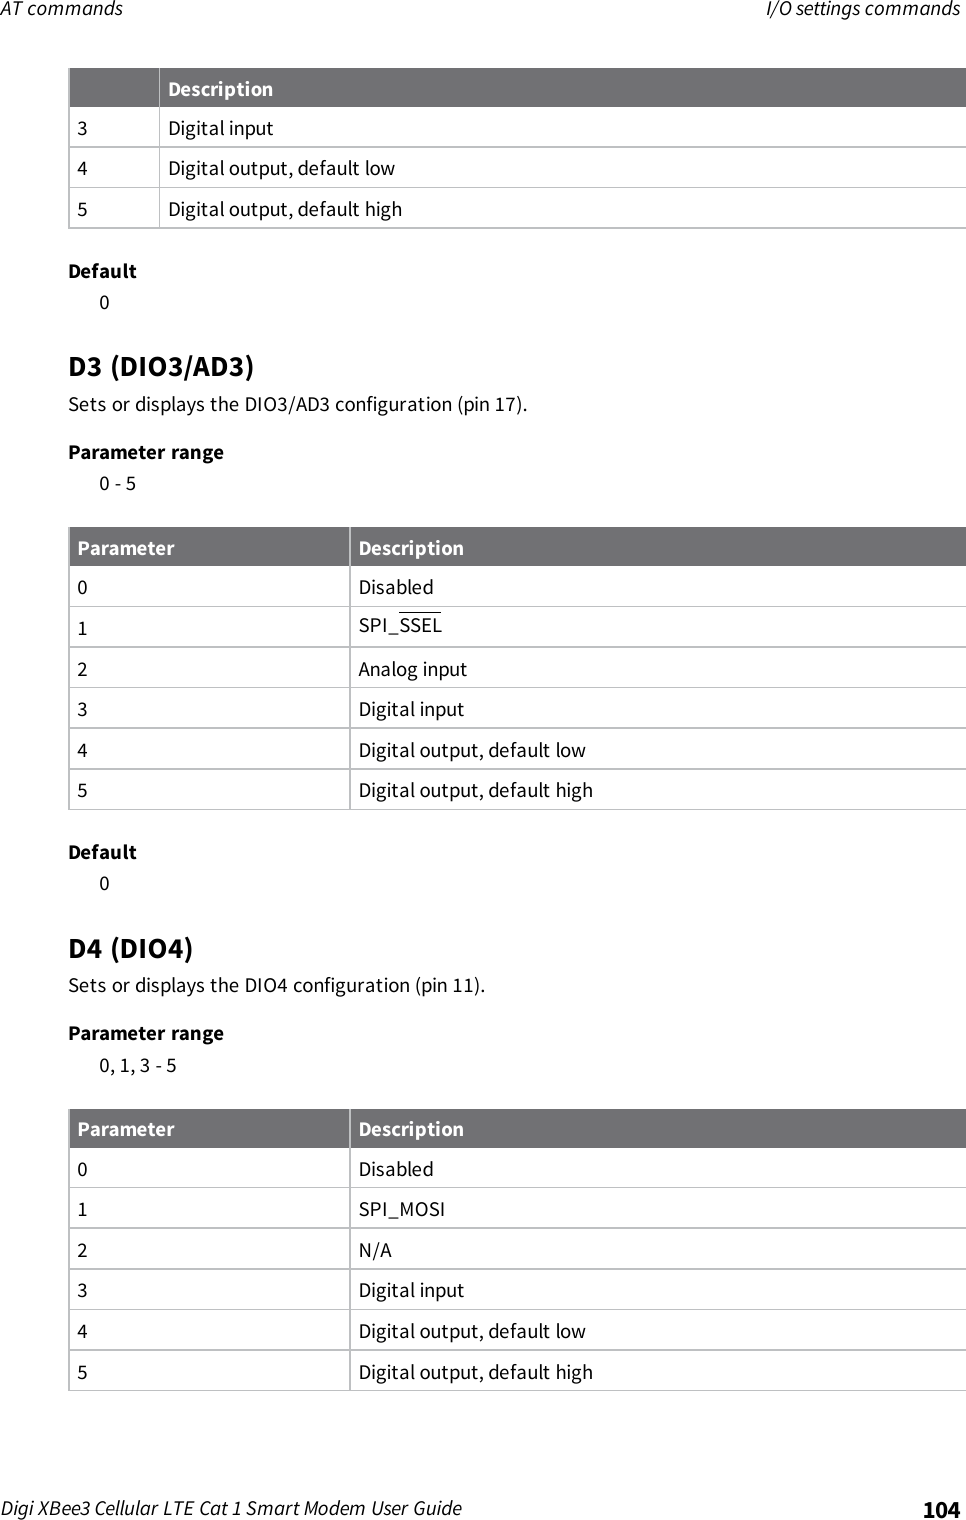 AT commands I/O settings commandsDigi XBee3 Cellular LTE Cat 1 Smart Modem User Guide 104Description3 Digital input4 Digital output, default low5 Digital output, default highDefault0D3 (DIO3/AD3)Sets or displays the DIO3/AD3 configuration (pin 17).Parameter range0 - 5Parameter Description0 Disabled1SPI_SSEL2 Analog input3 Digital input4 Digital output, default low5 Digital output, default highDefault0D4 (DIO4)Sets or displays the DIO4 configuration (pin 11).Parameter range0, 1, 3 - 5Parameter Description0 Disabled1 SPI_MOSI2 N/A3 Digital input4 Digital output, default low5 Digital output, default high